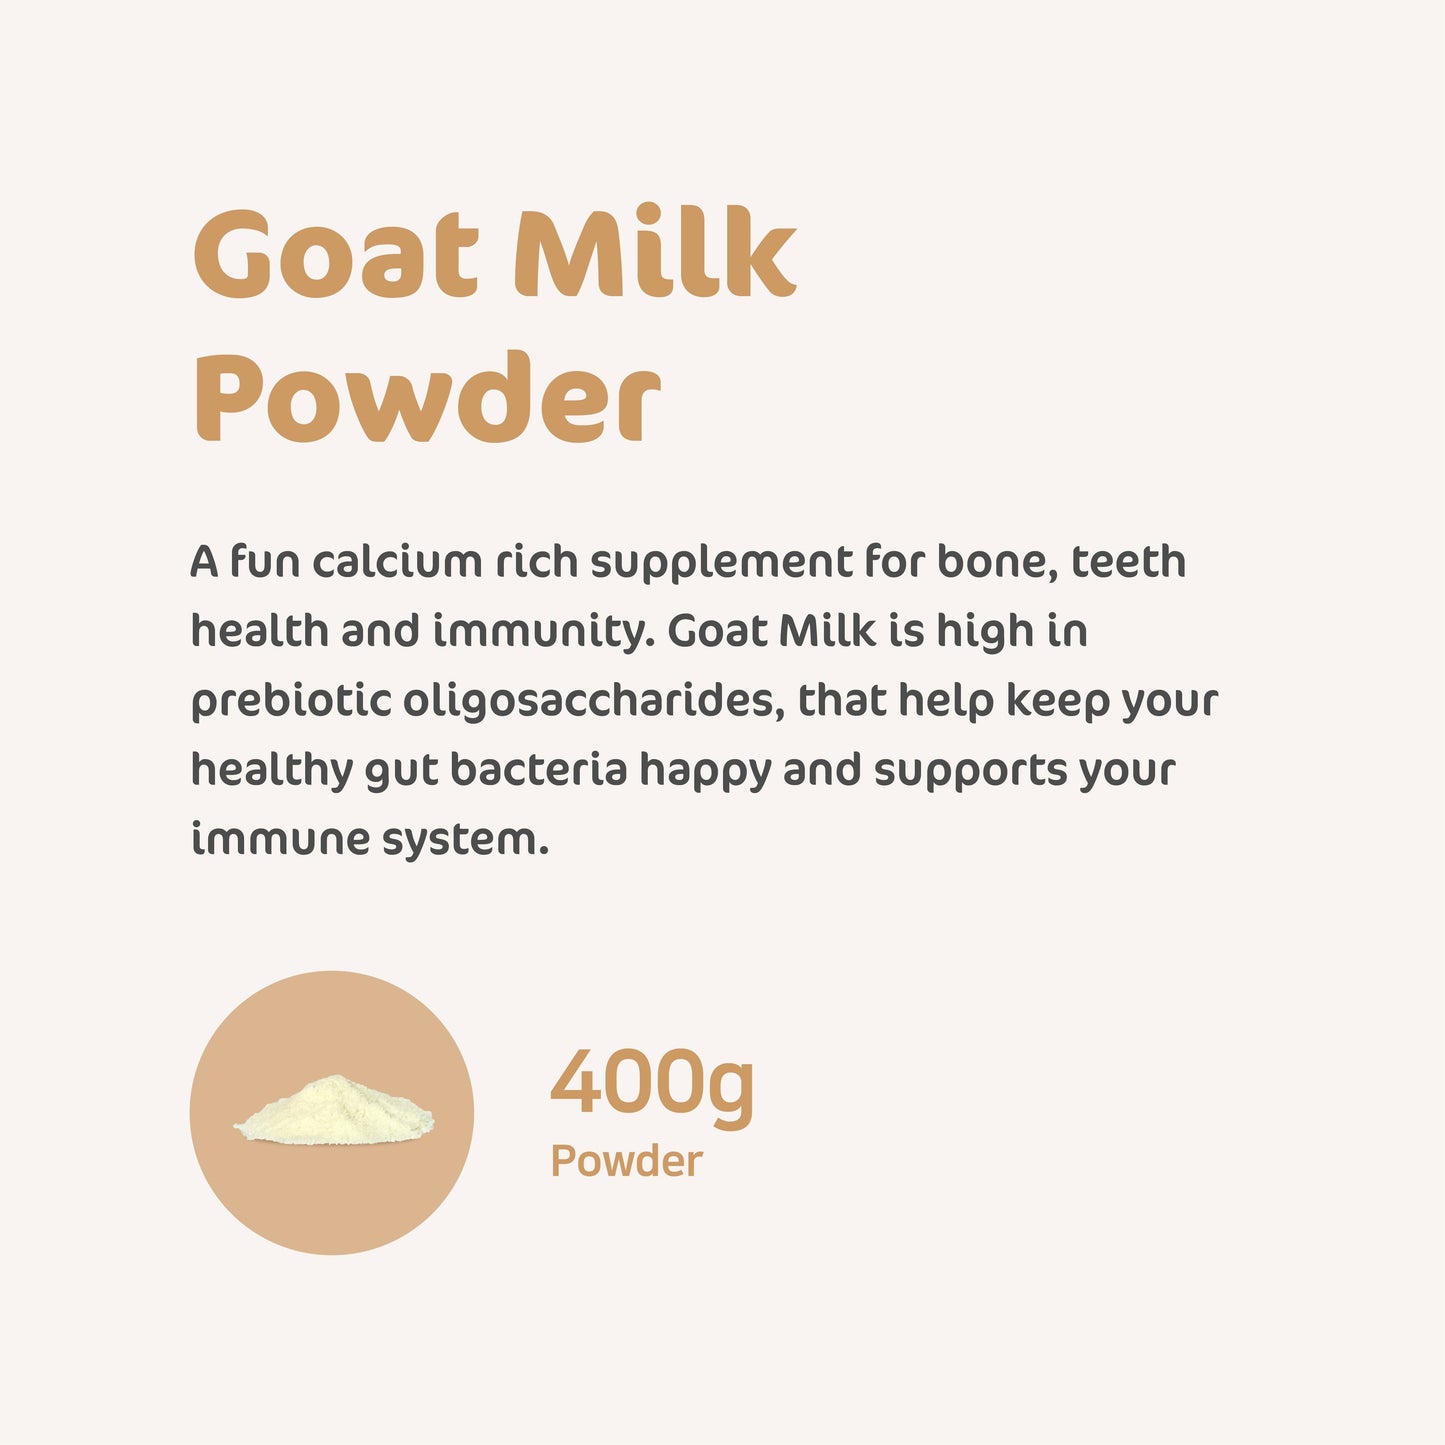 New Zealand Goat Milk Powder